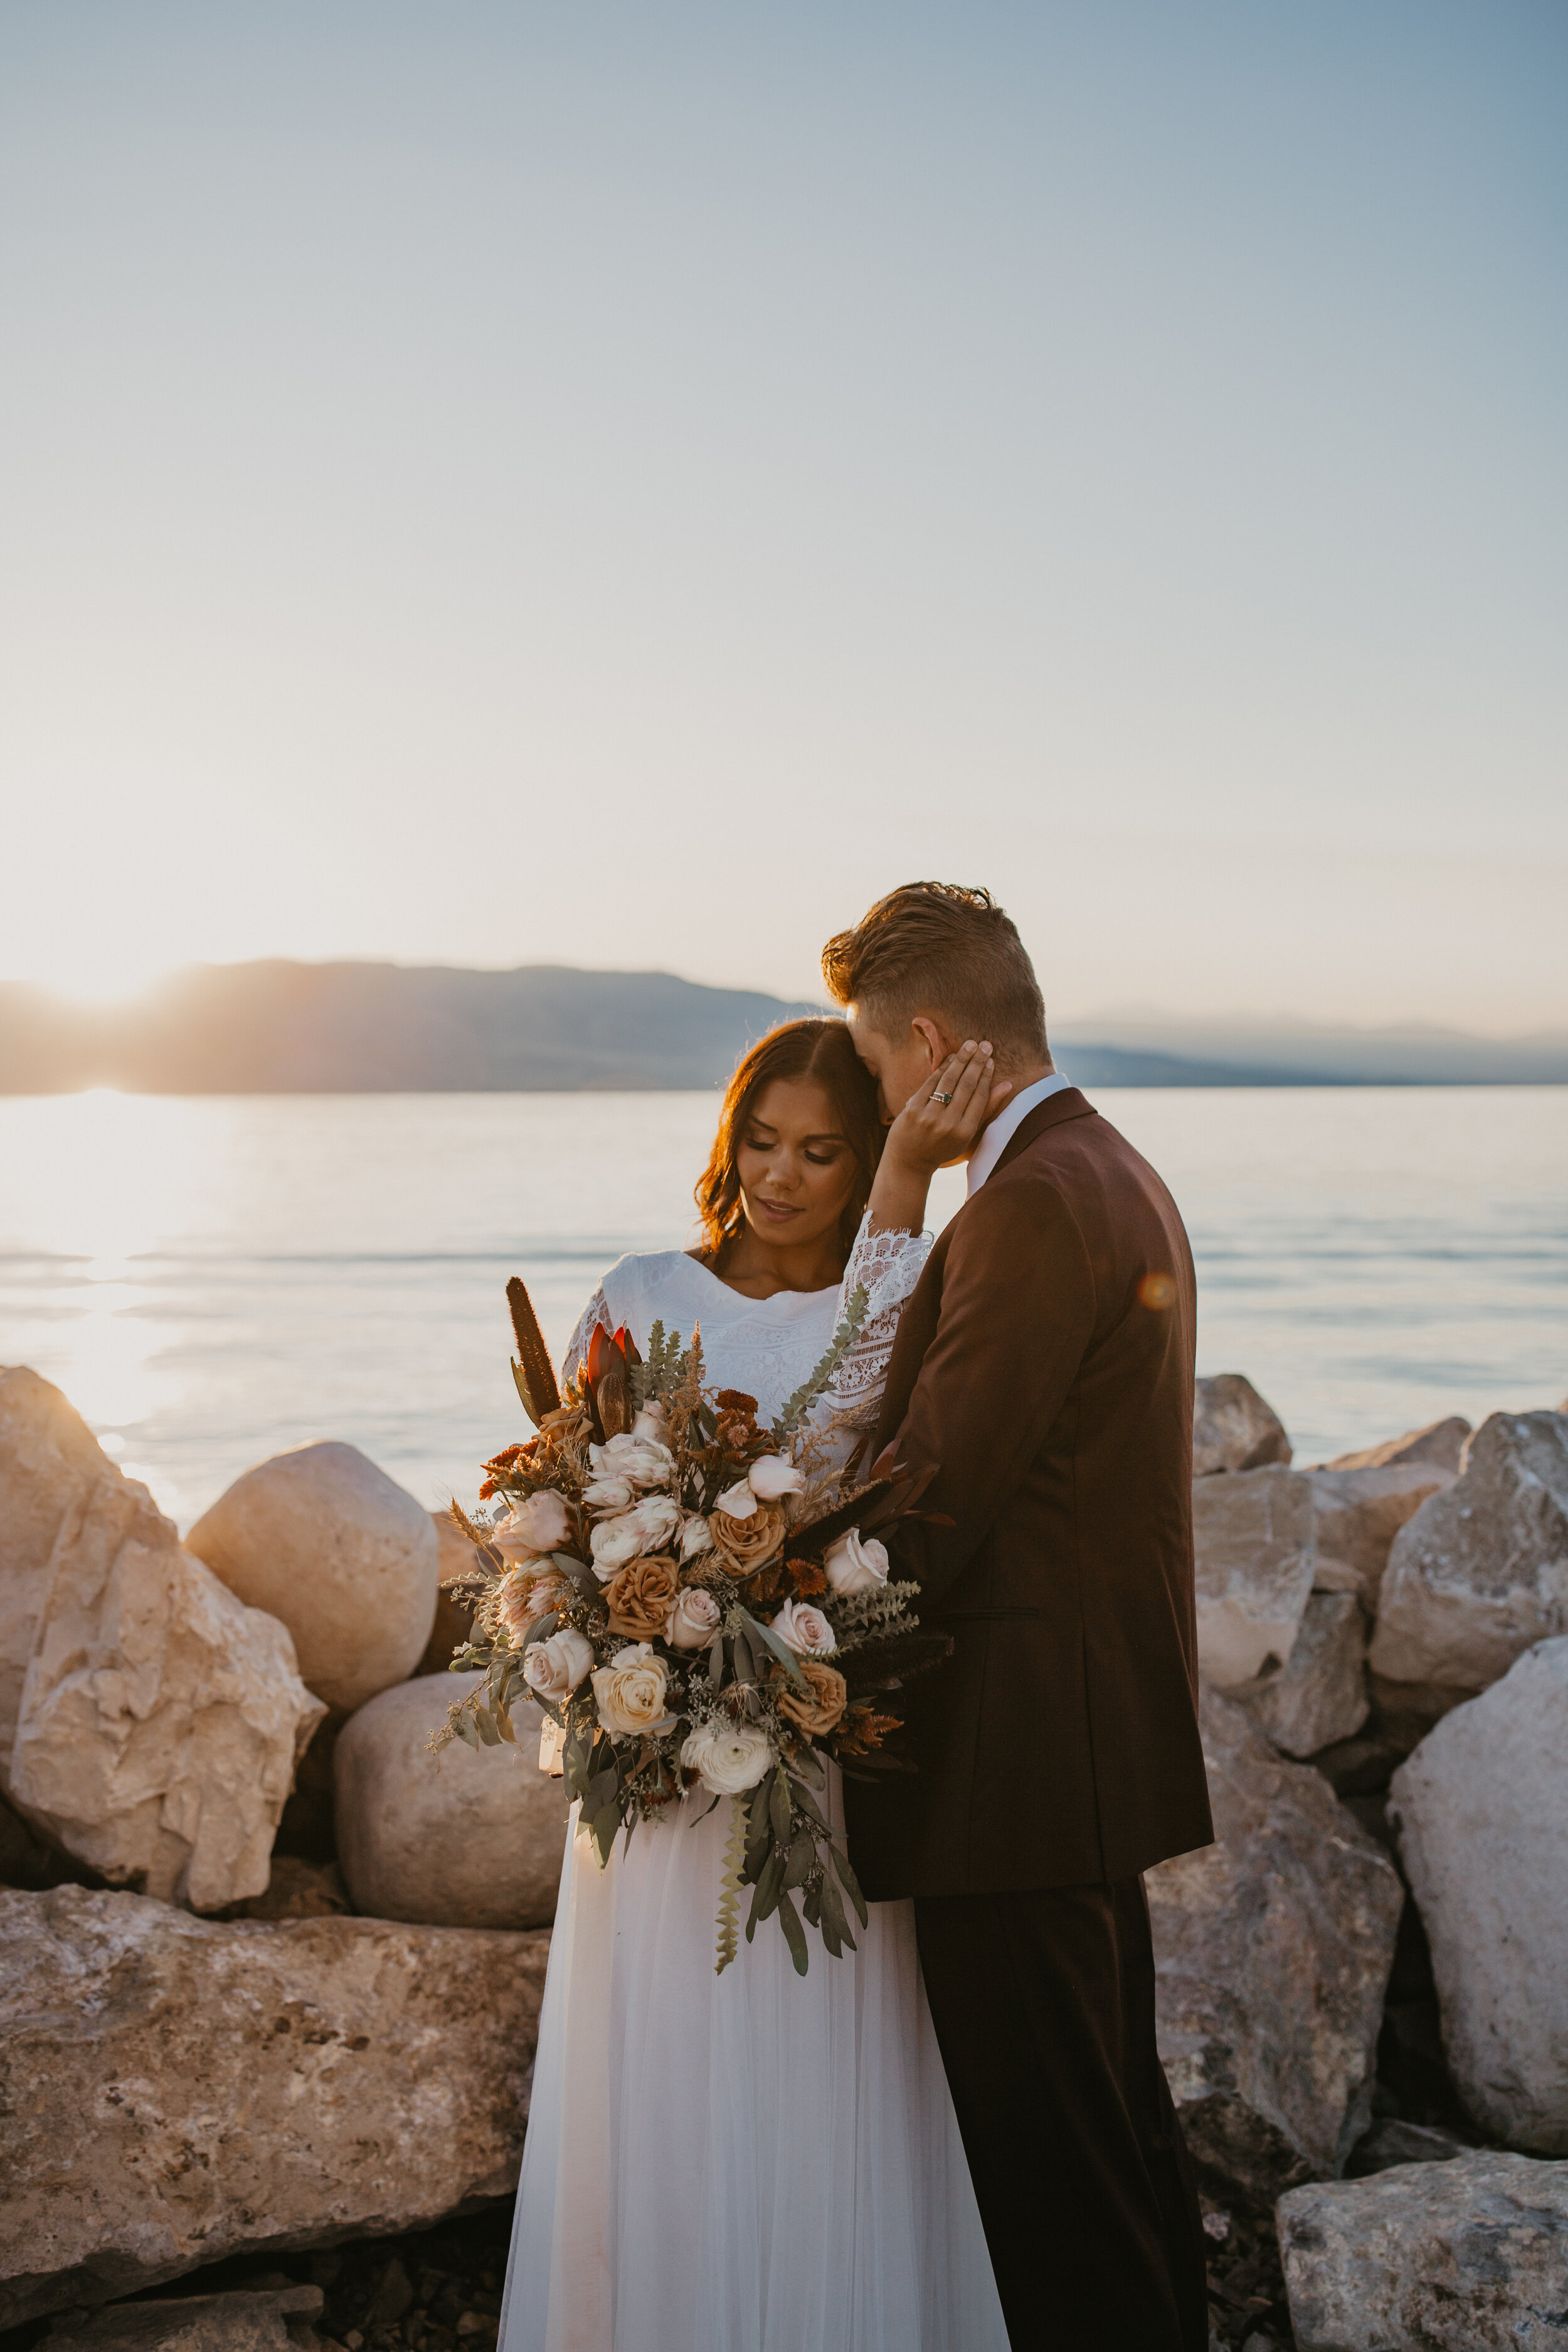 Sunset bridals bouquet wedding dress bride and groom lake ocean beach mountains Utah lake marina #utahphotographer #weddingphotographer #bride #bridals #brideandgroom #weddingphotos